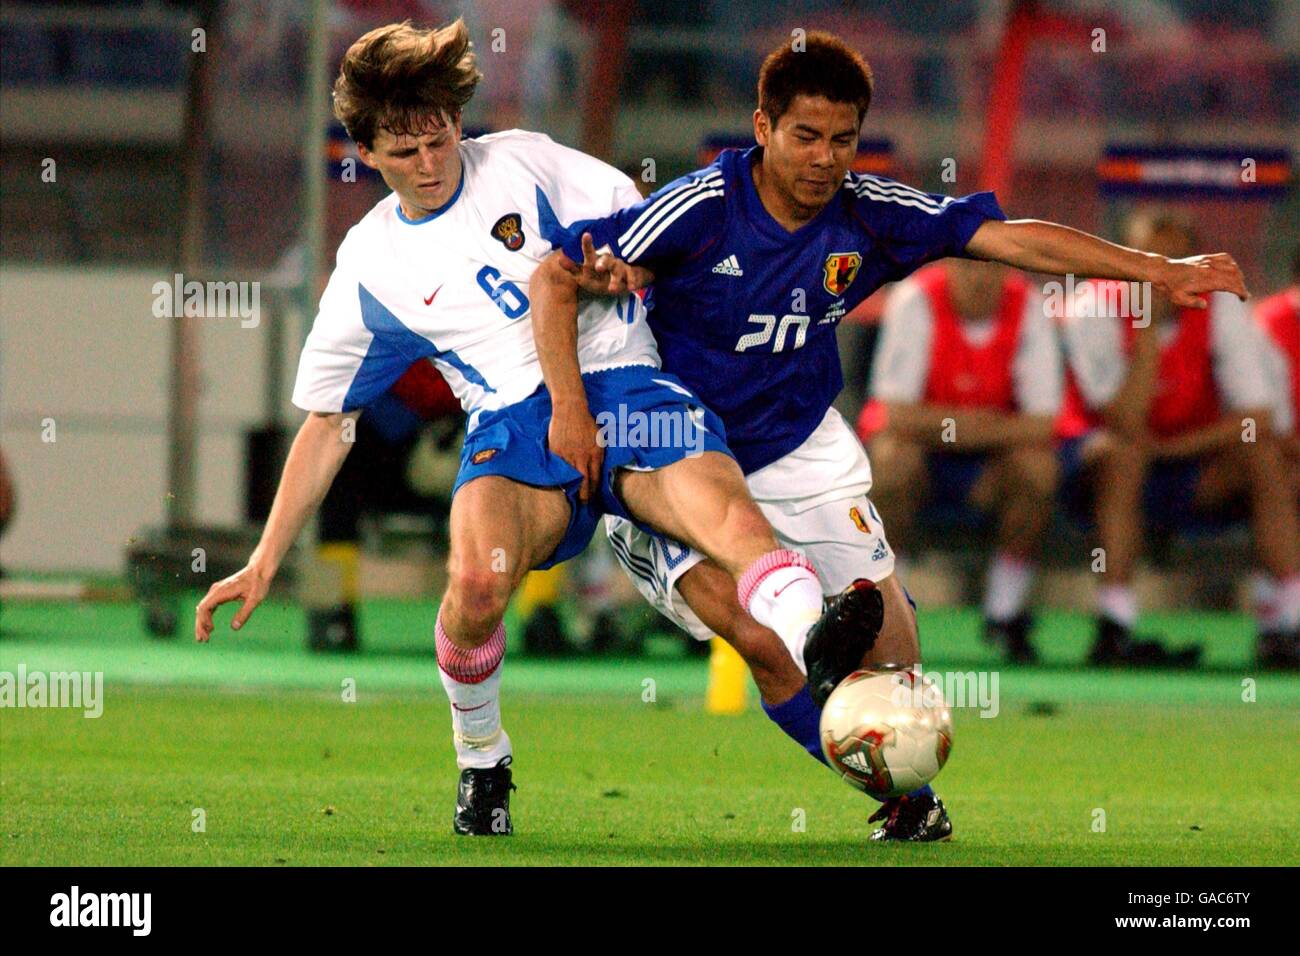 soccer-fifa-world-cup-2002-group-h-japan-v-russia-GAC6TY.jpg